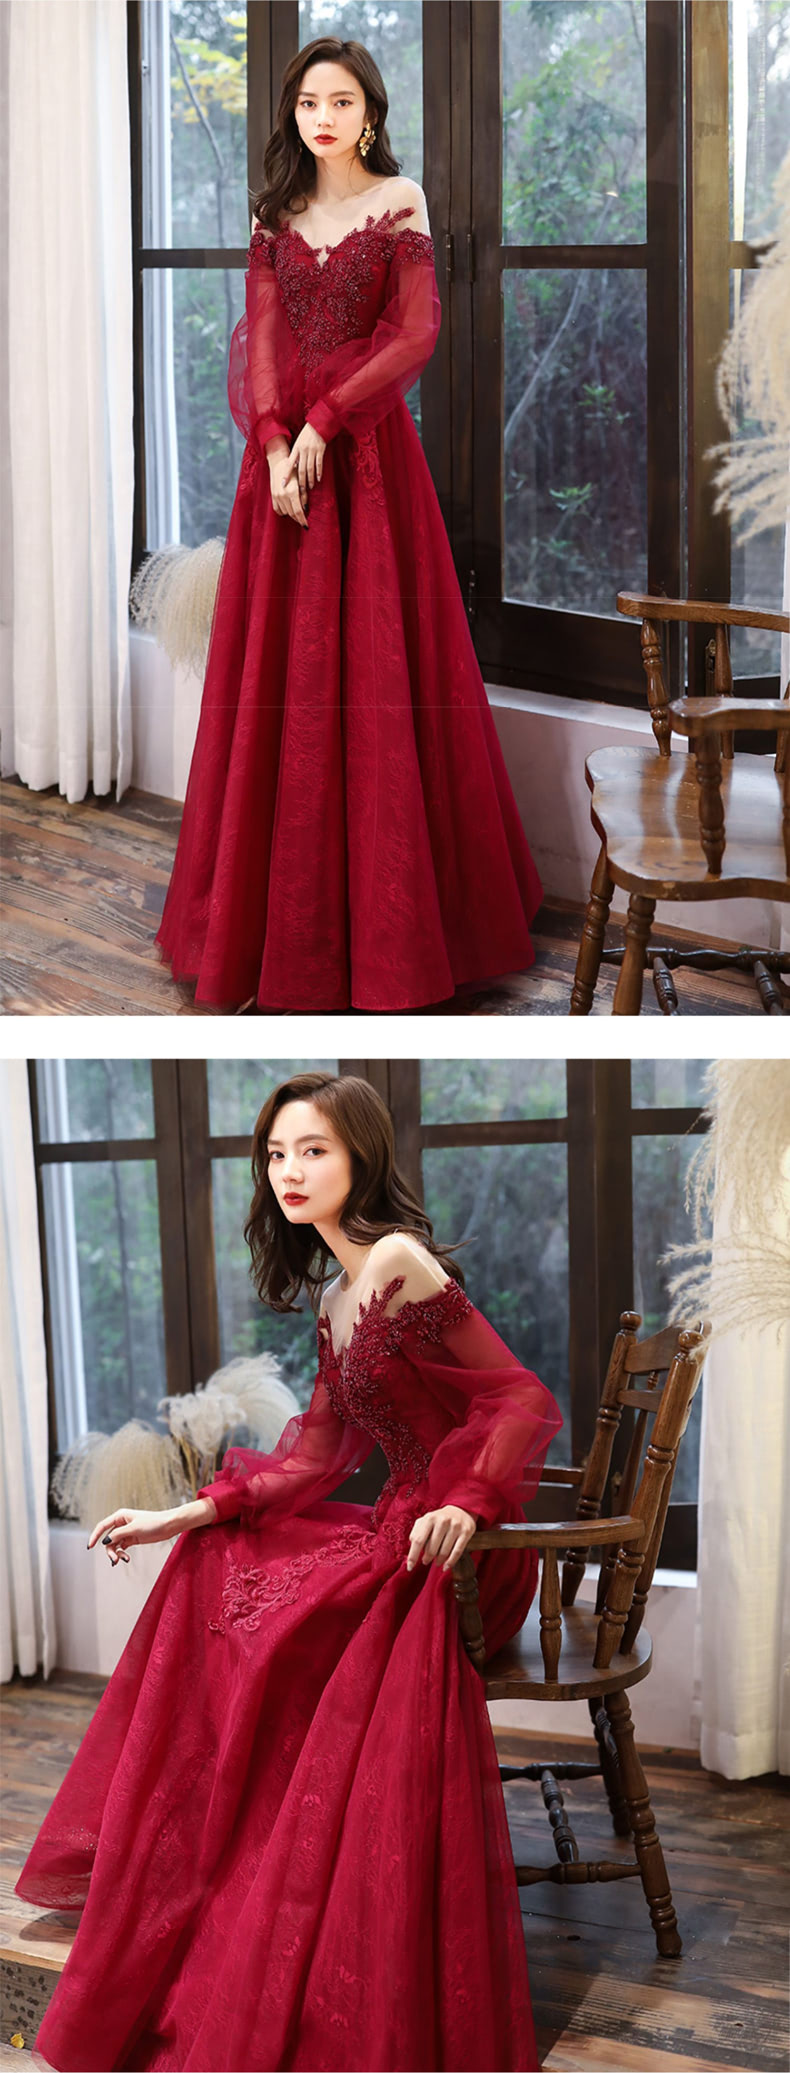 Charming-Wine-Red-Sleeveless-Long-Sleeve-Prom-Evening-Dress14